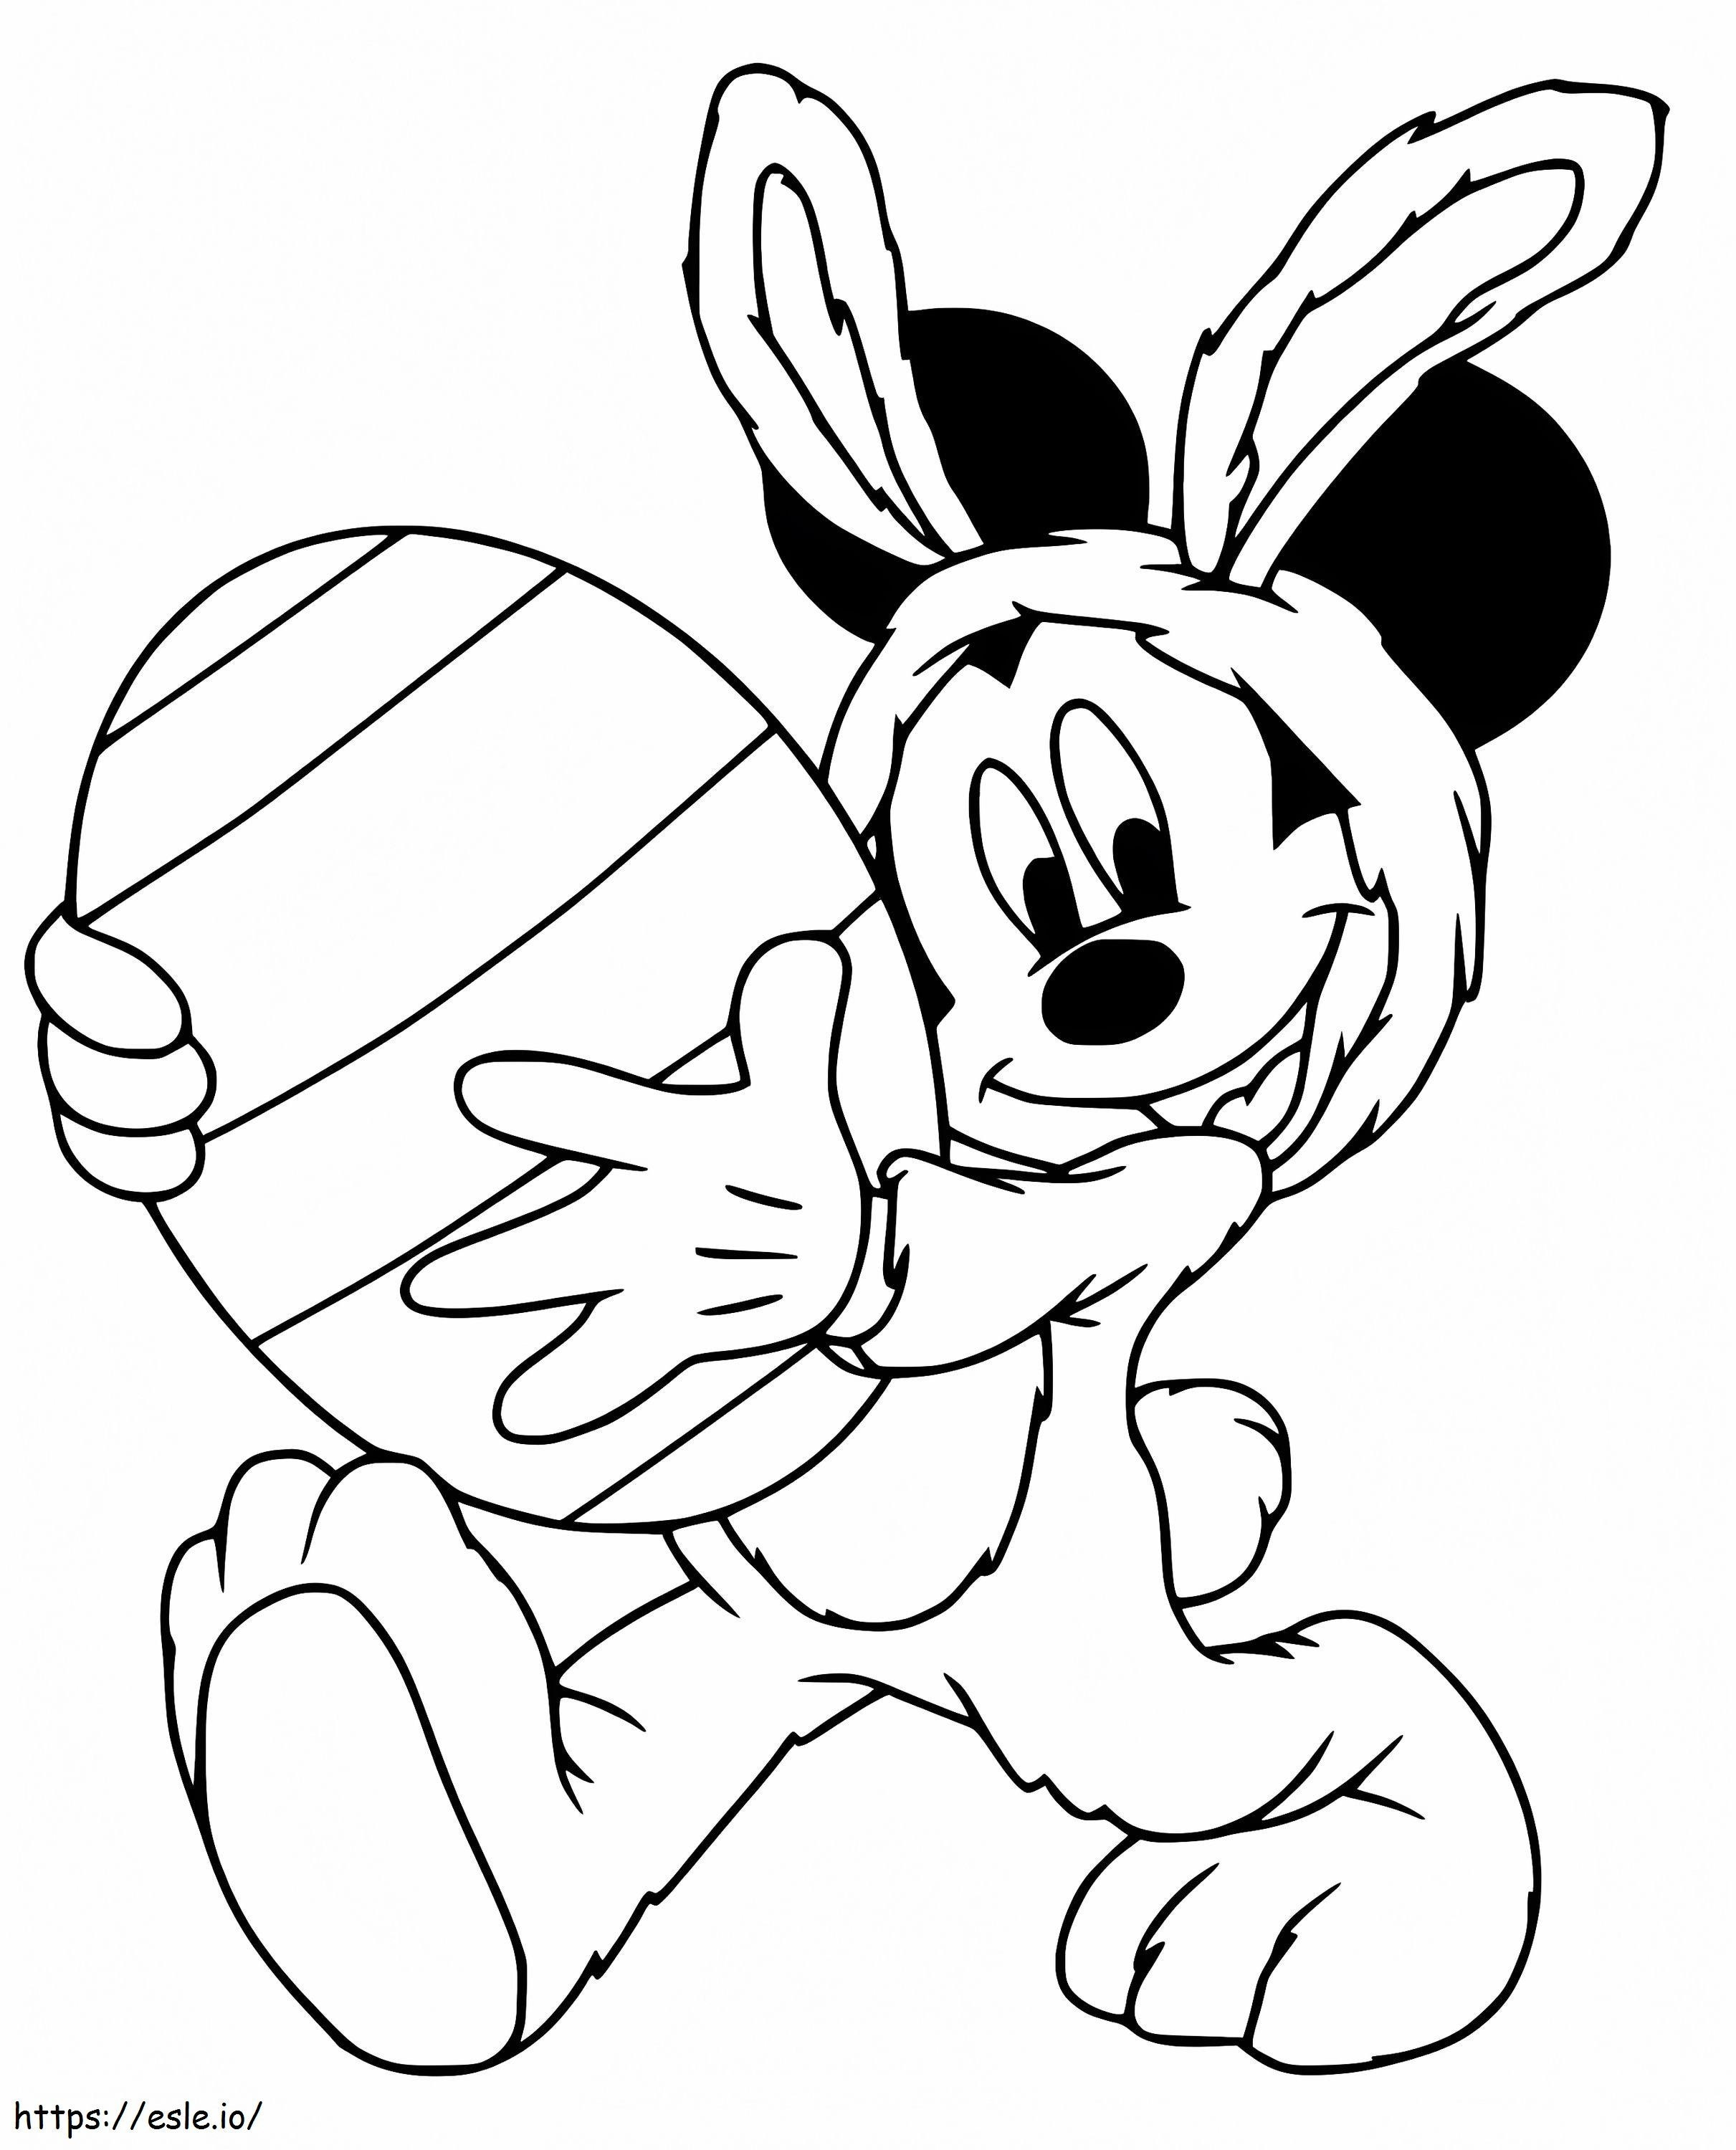 Mickey Mouse mit großem Osterei ausmalbilder